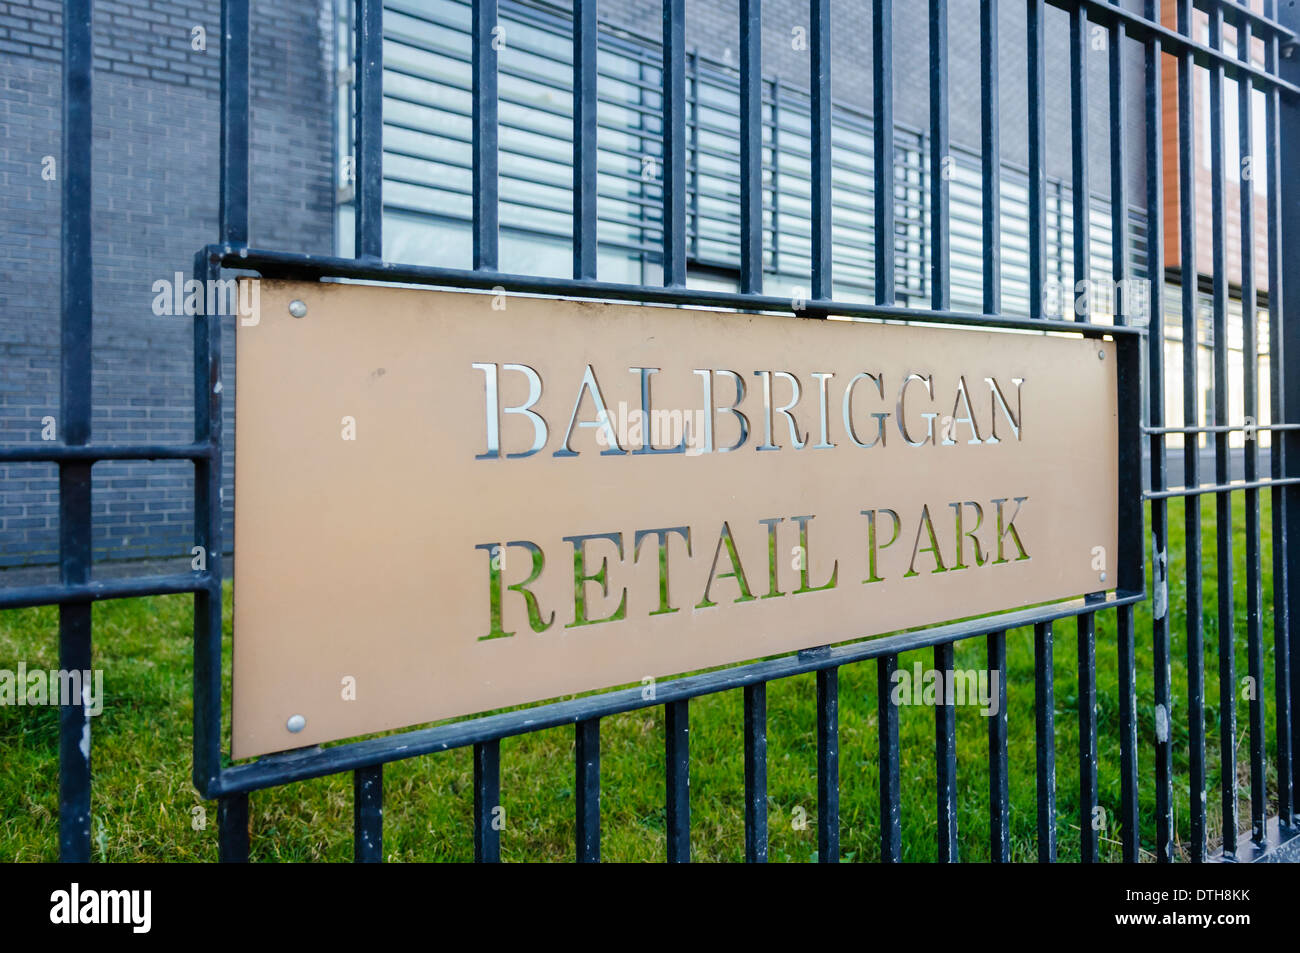 Sign for Balbriggan Retail park Stock Photo